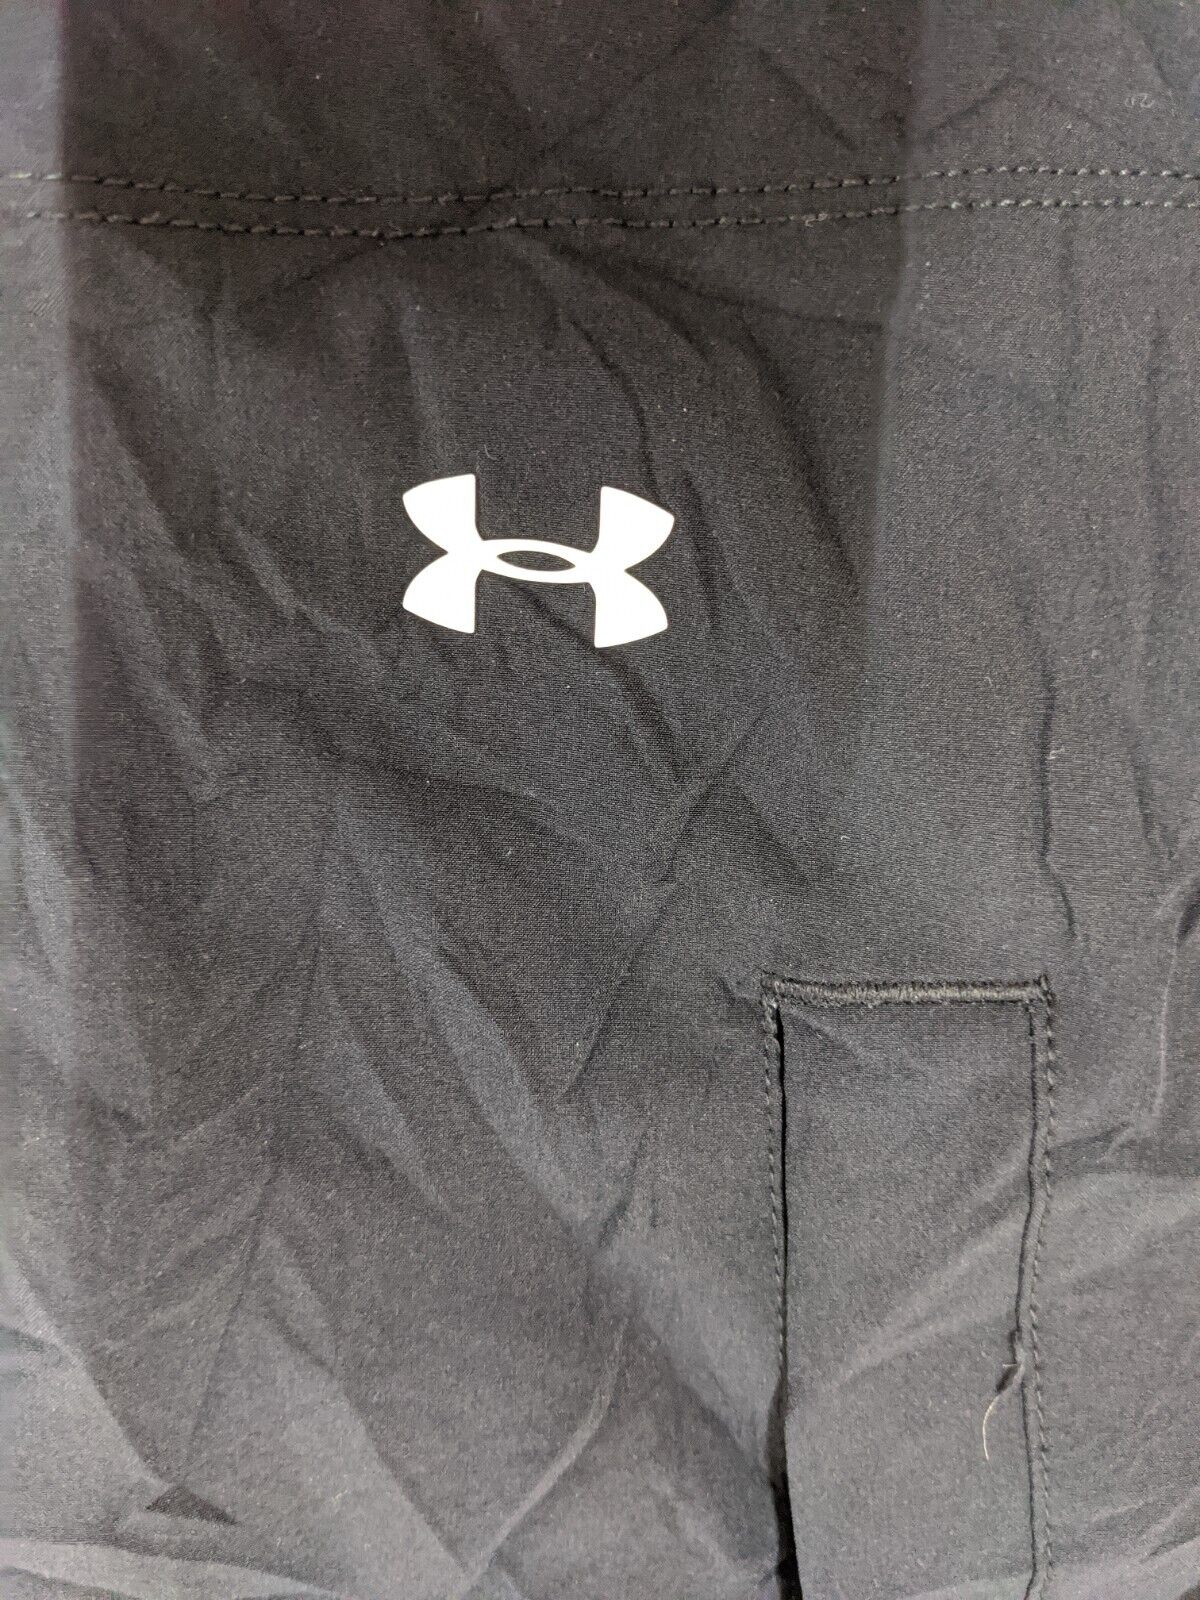 Under Armour Heat Gear Jacket Hoodie Mens Adult XL Round Shaped Neck White Black